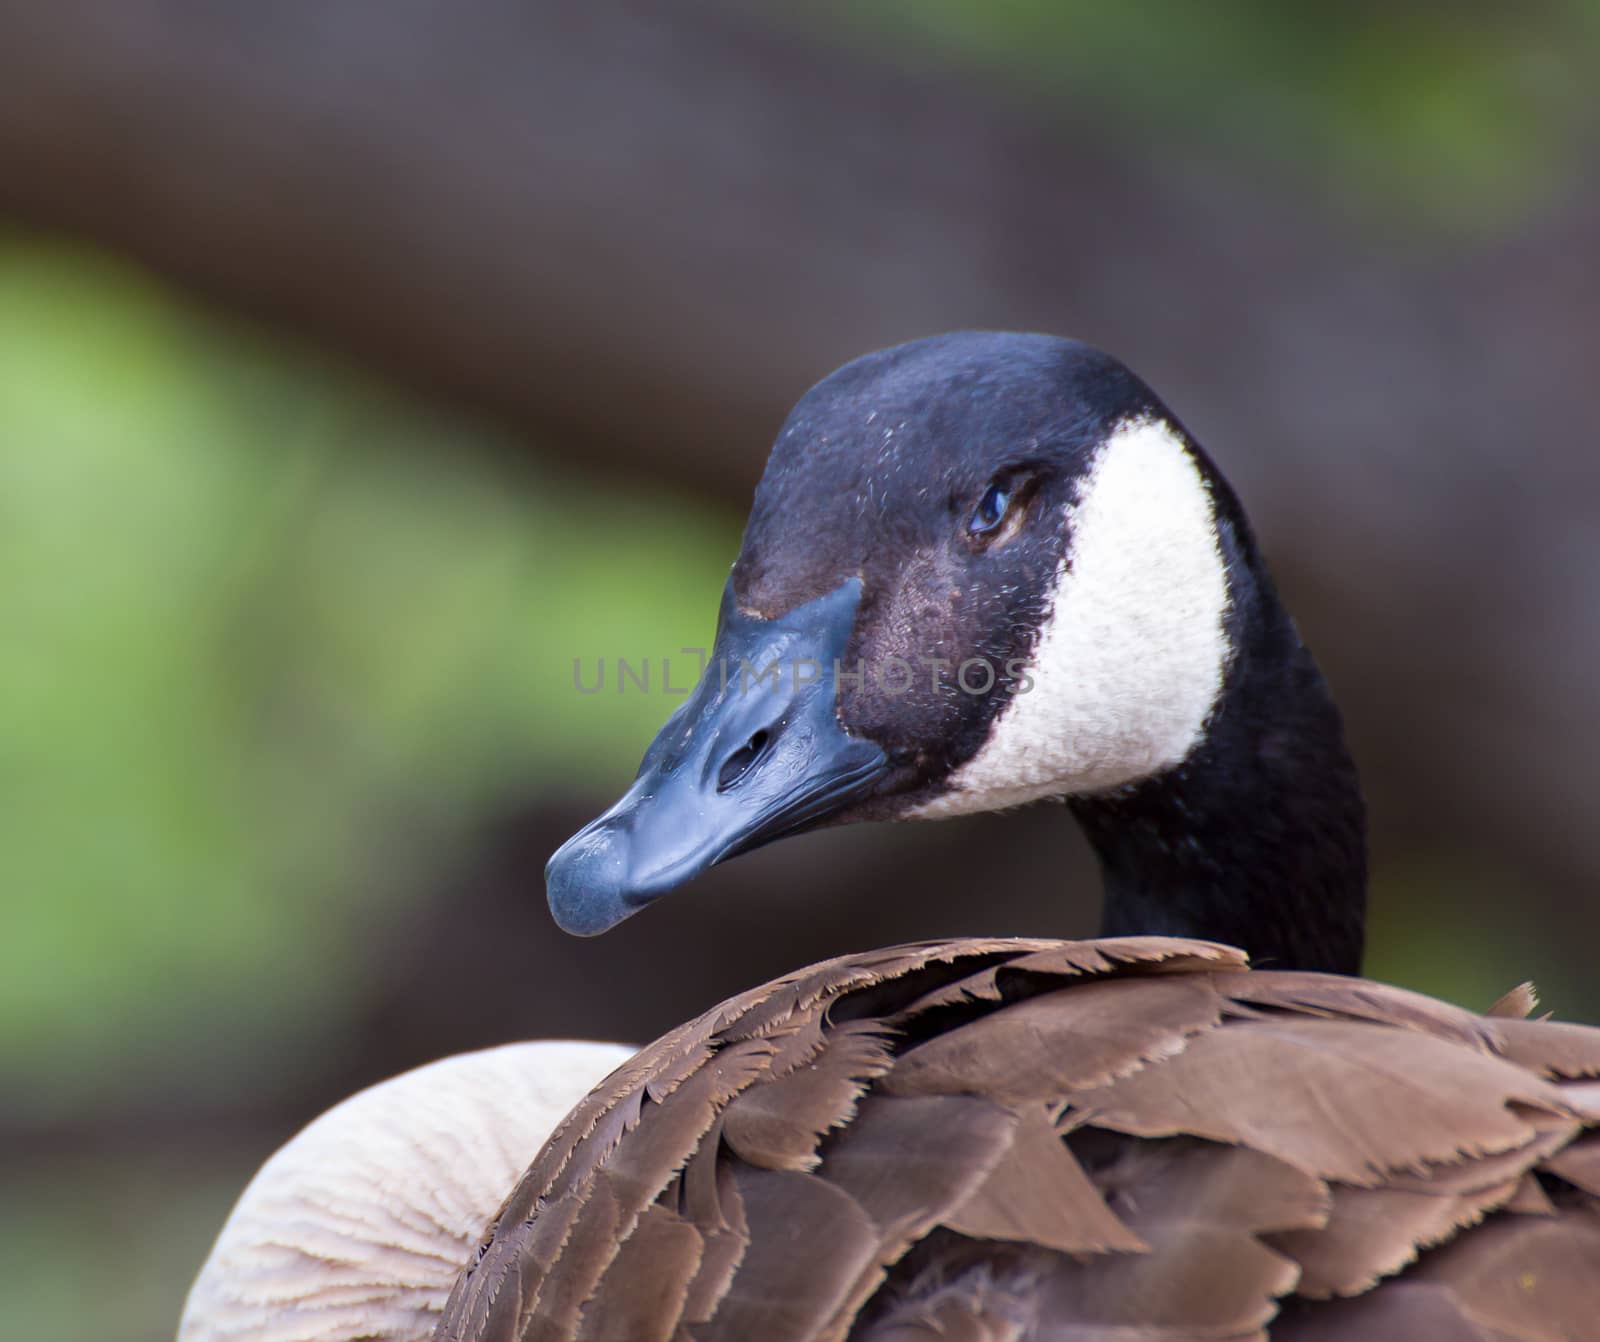 Canada Goose profile close-up head and neck.